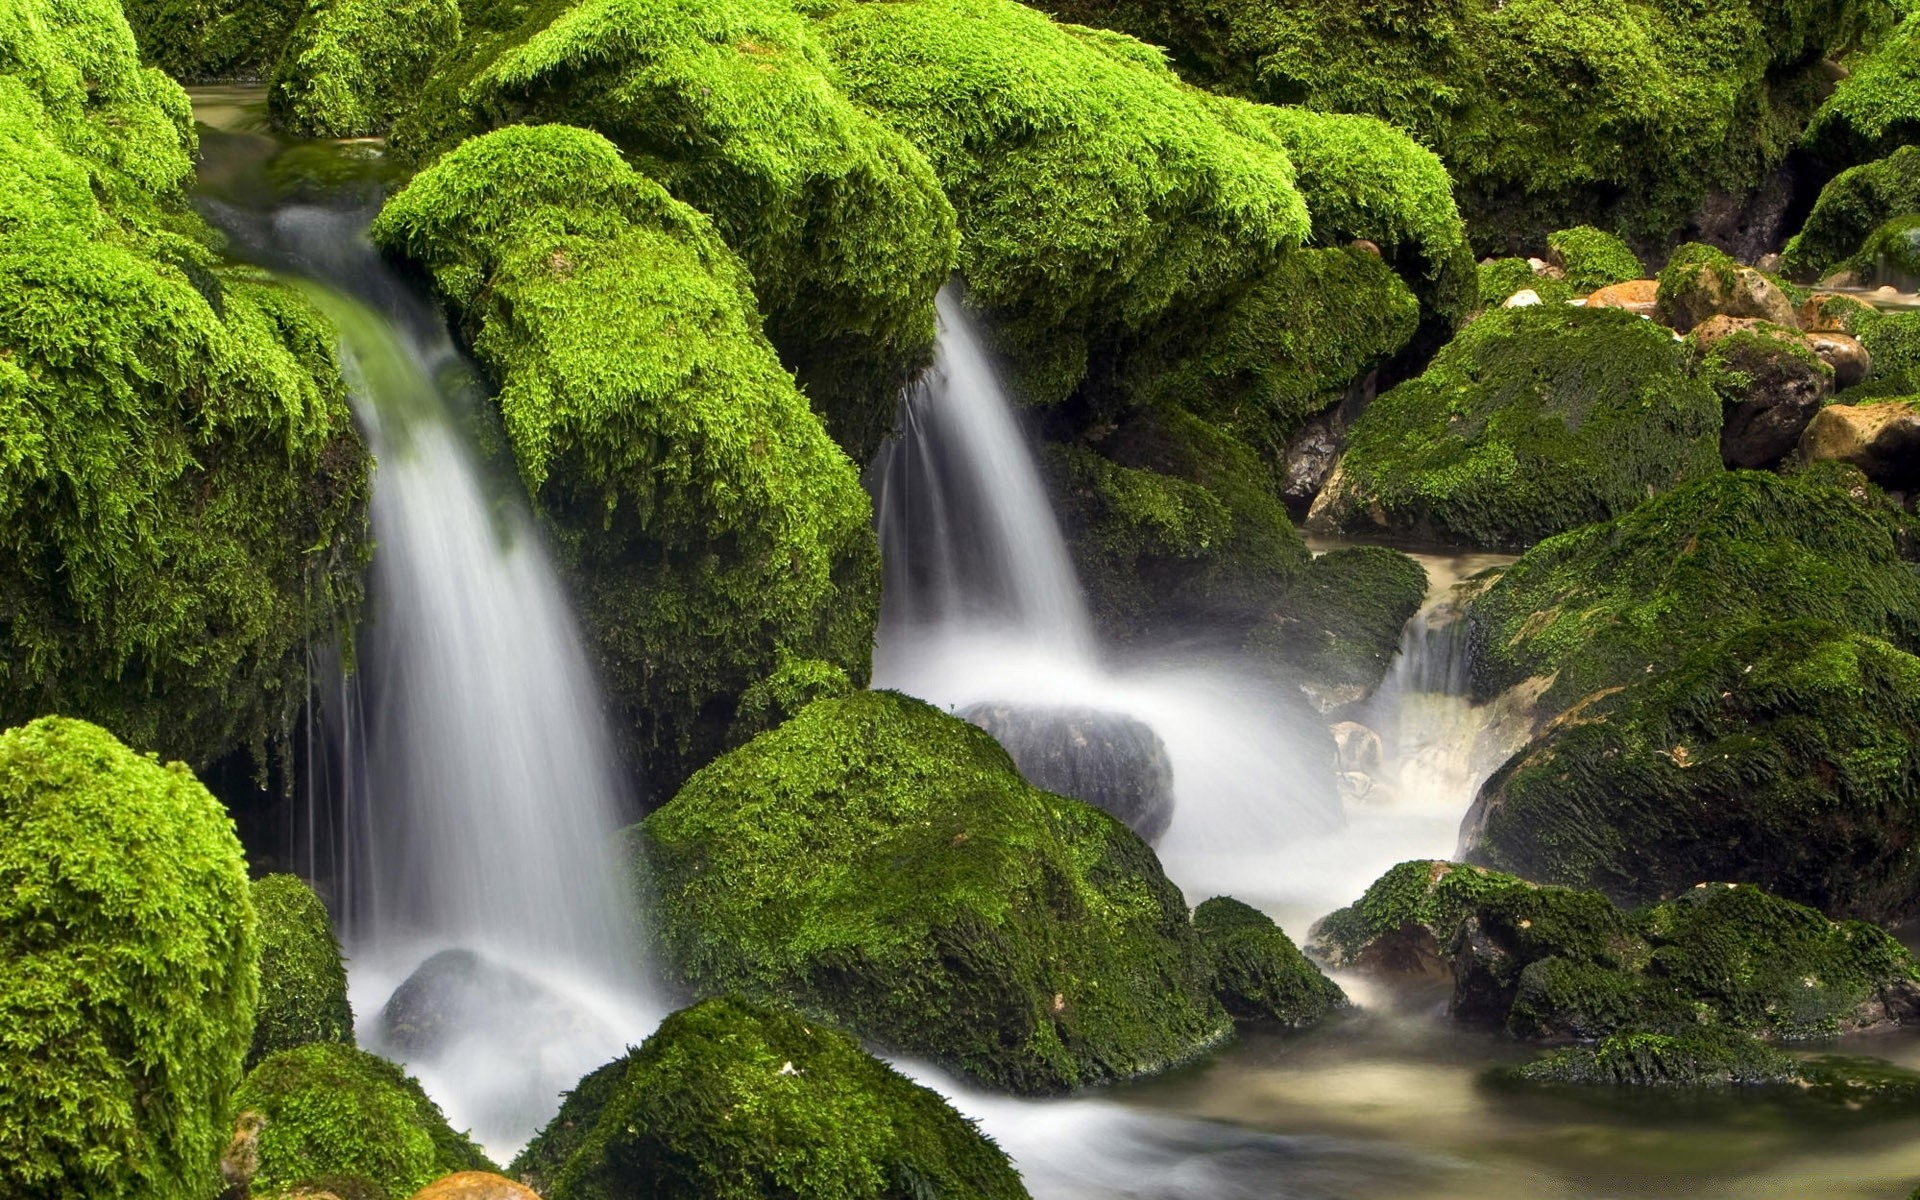 Обои на телефон живой водопад. Природа. Живая природа водопады. Красивые водопады. Картинки на рабочий стол водопад.